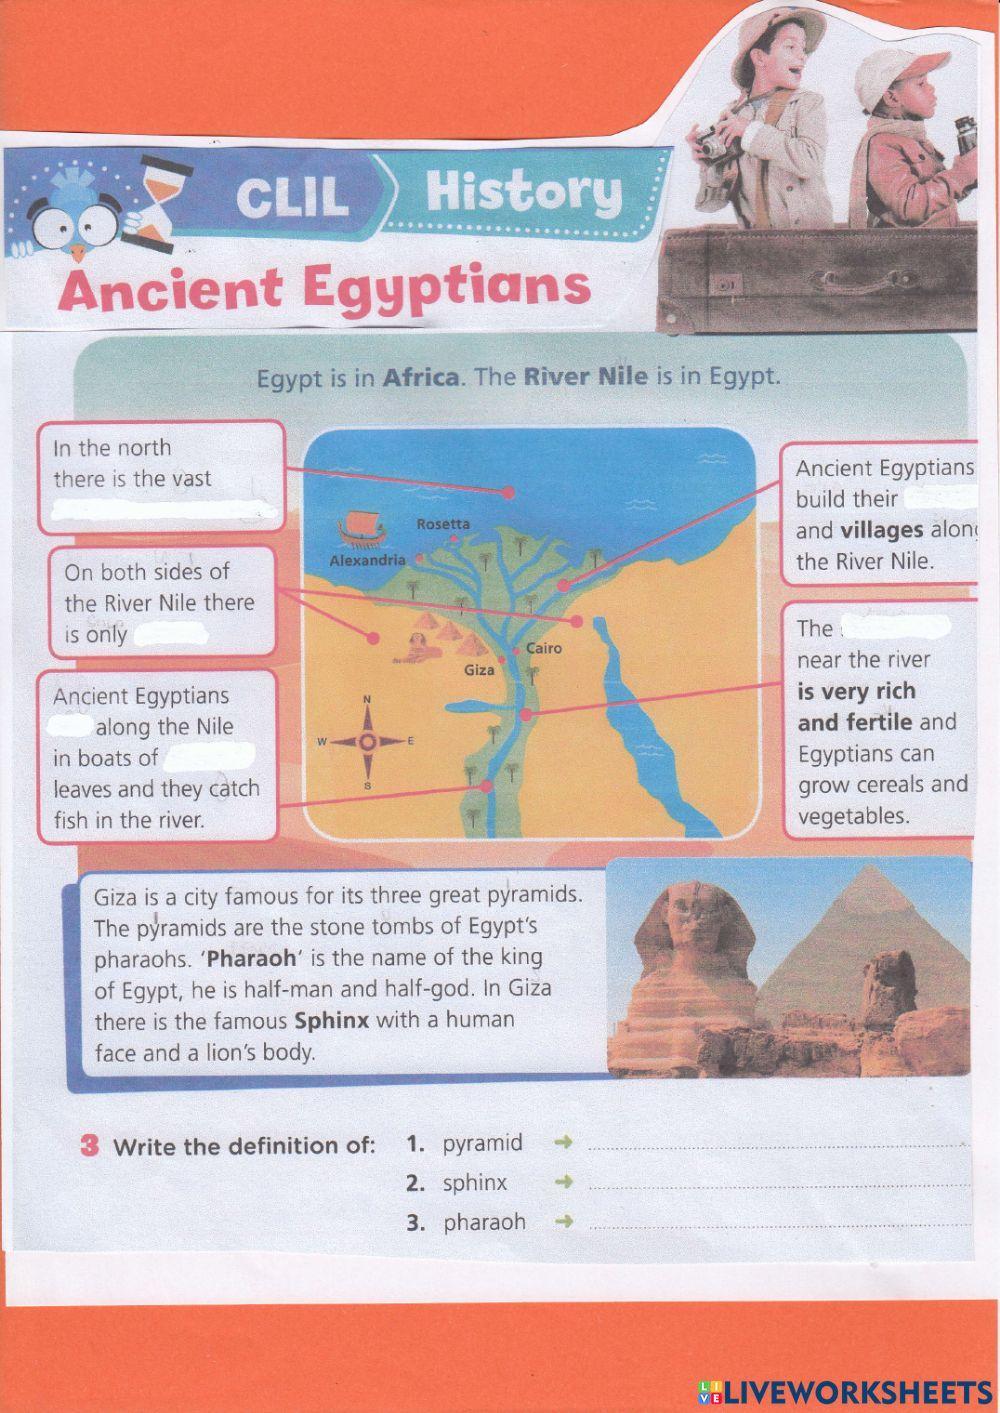 Ancient Egyptians and river Nile (pagina tratta dal libro -I like english-, casa editrice Giunti)